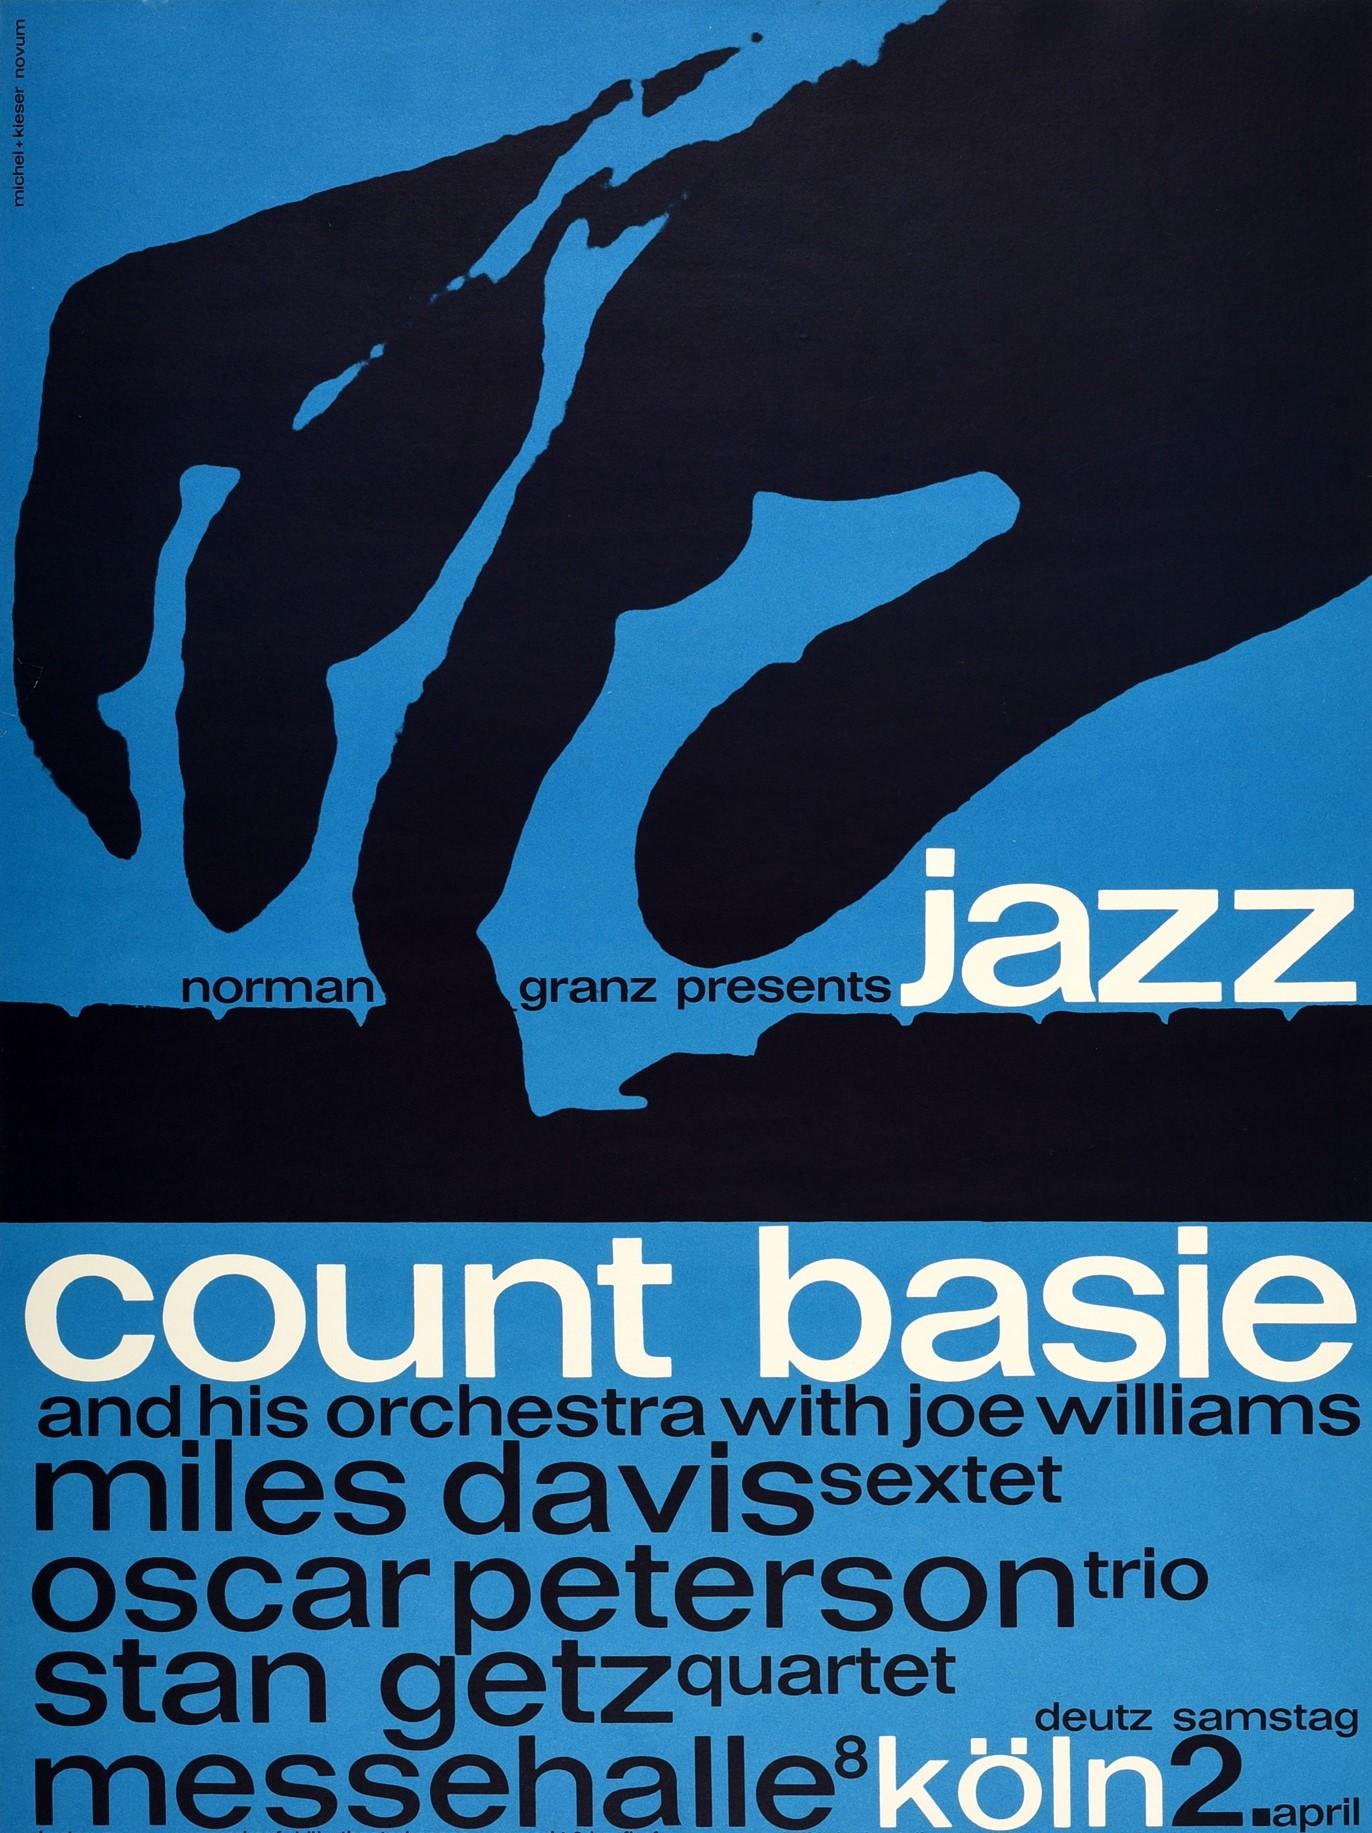 original jazz posters